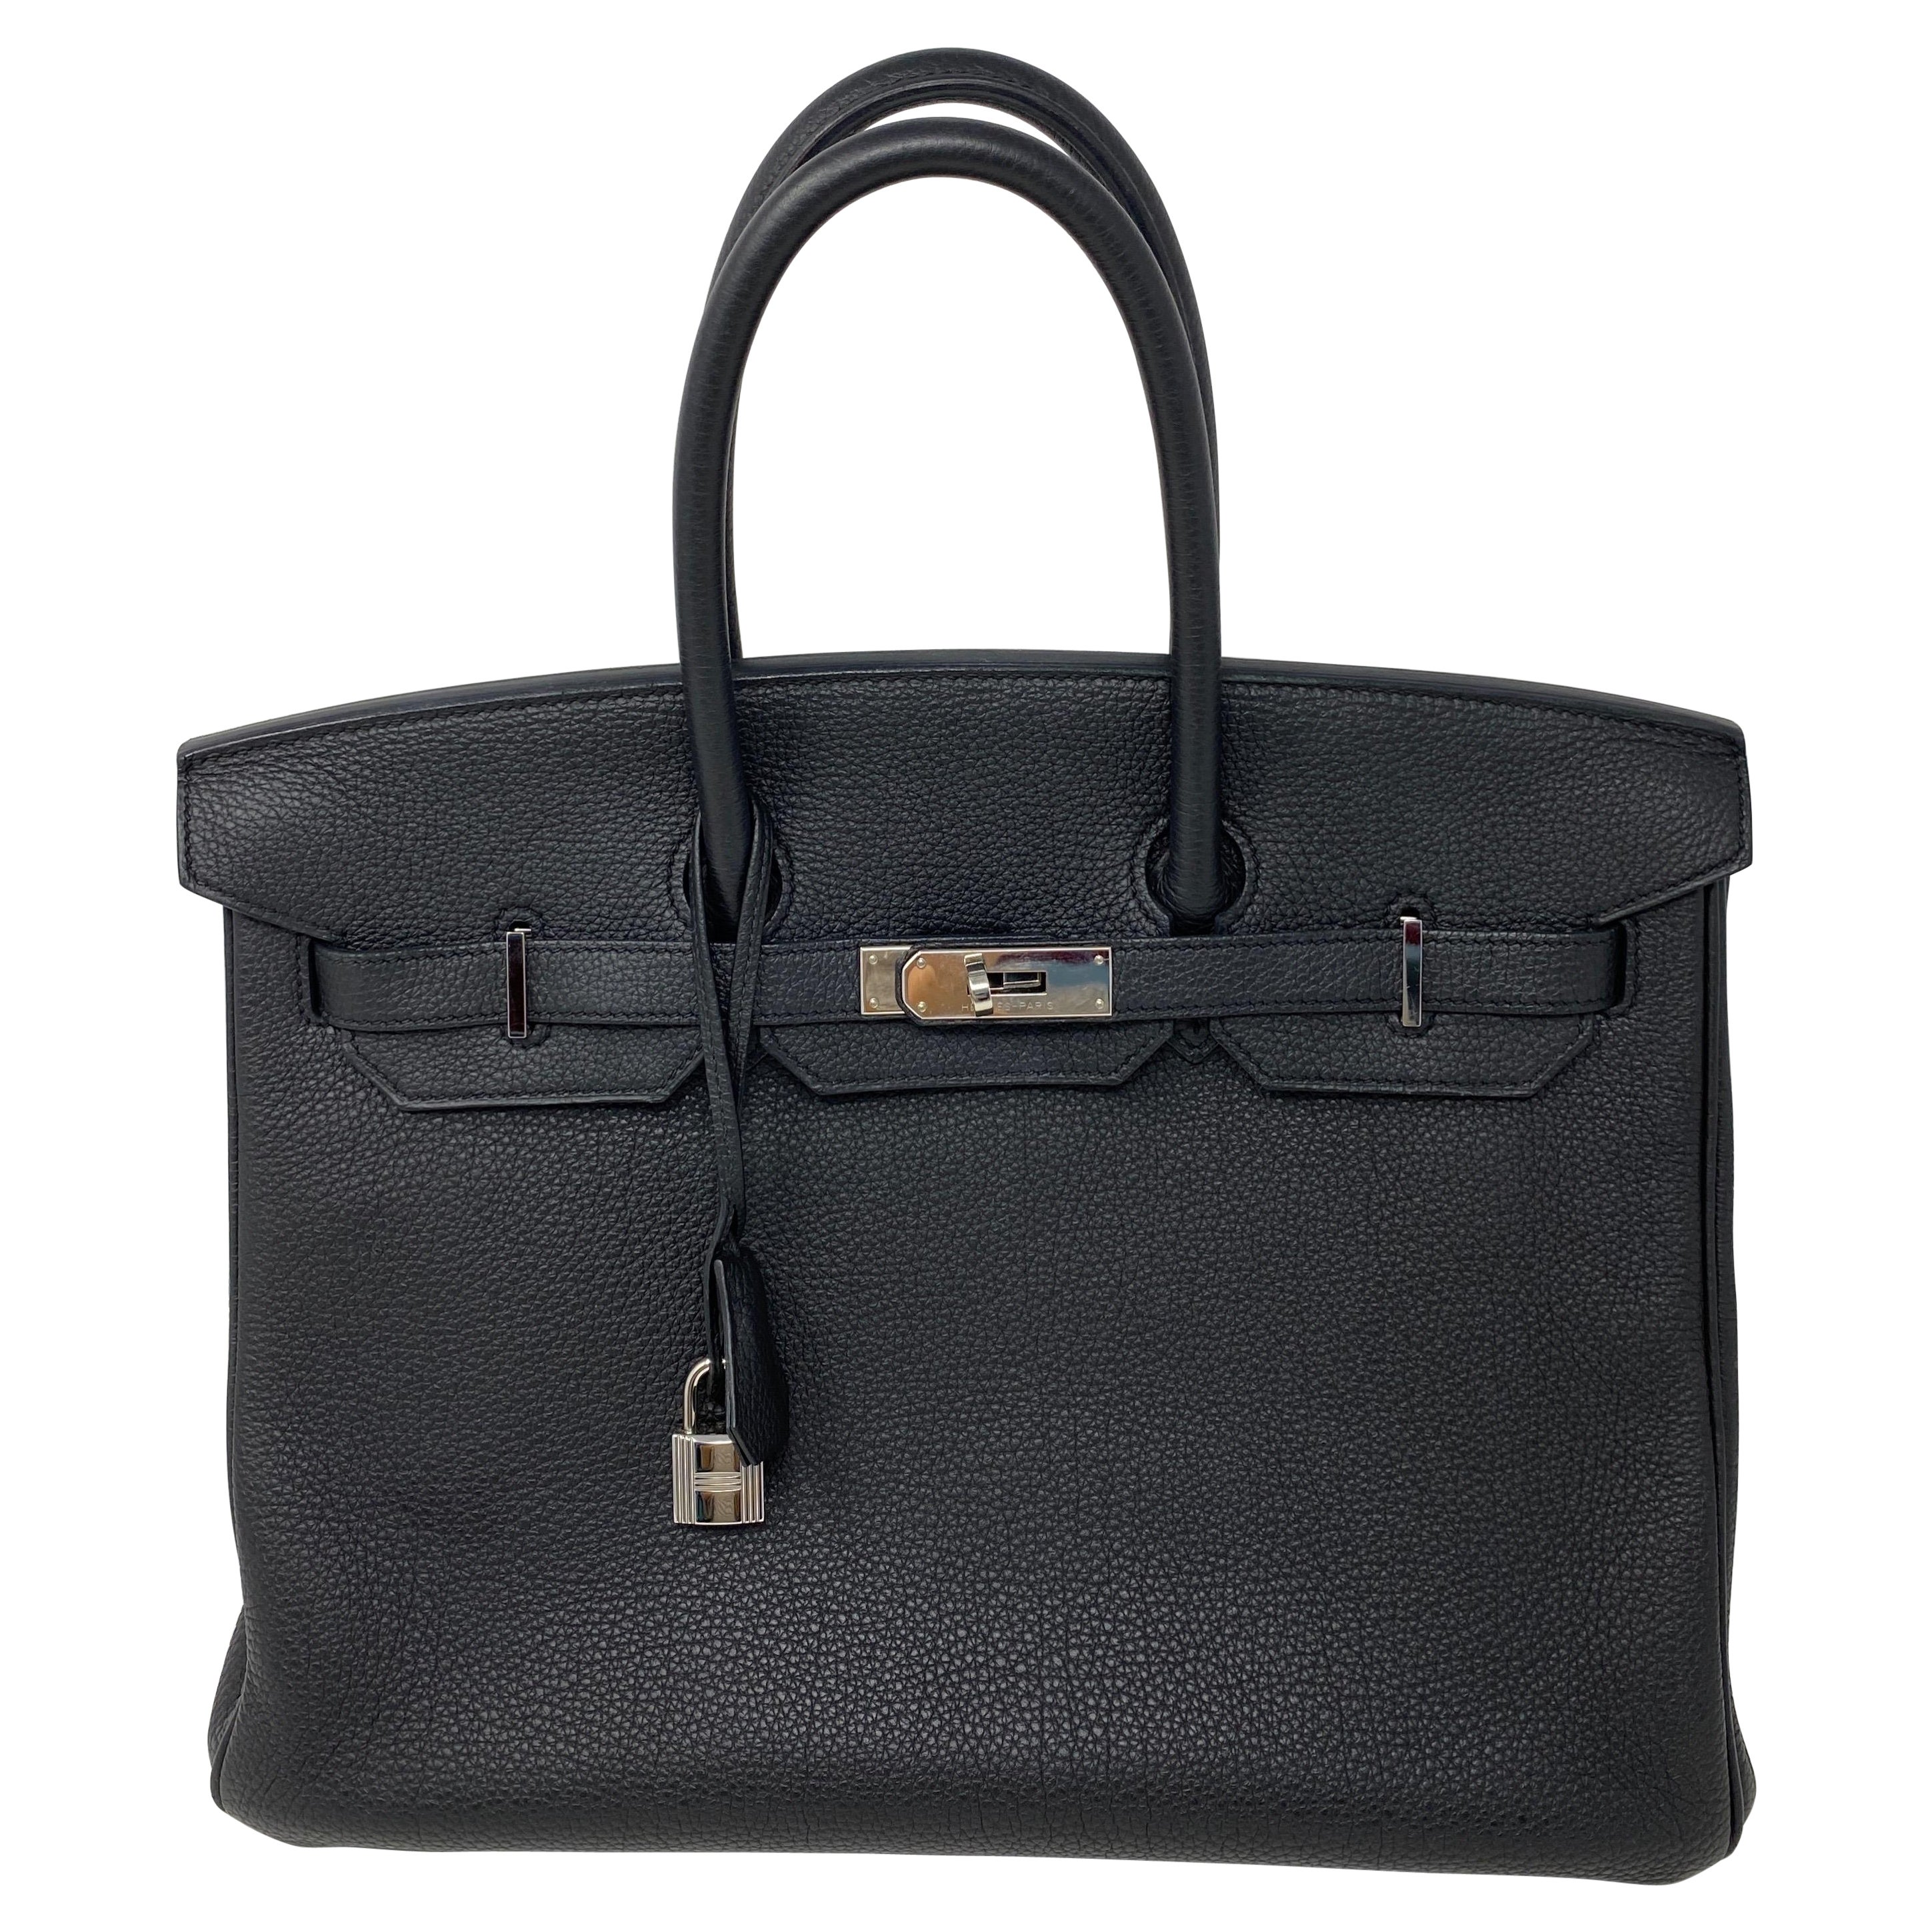 Hermes Black Birkin 35 Bag